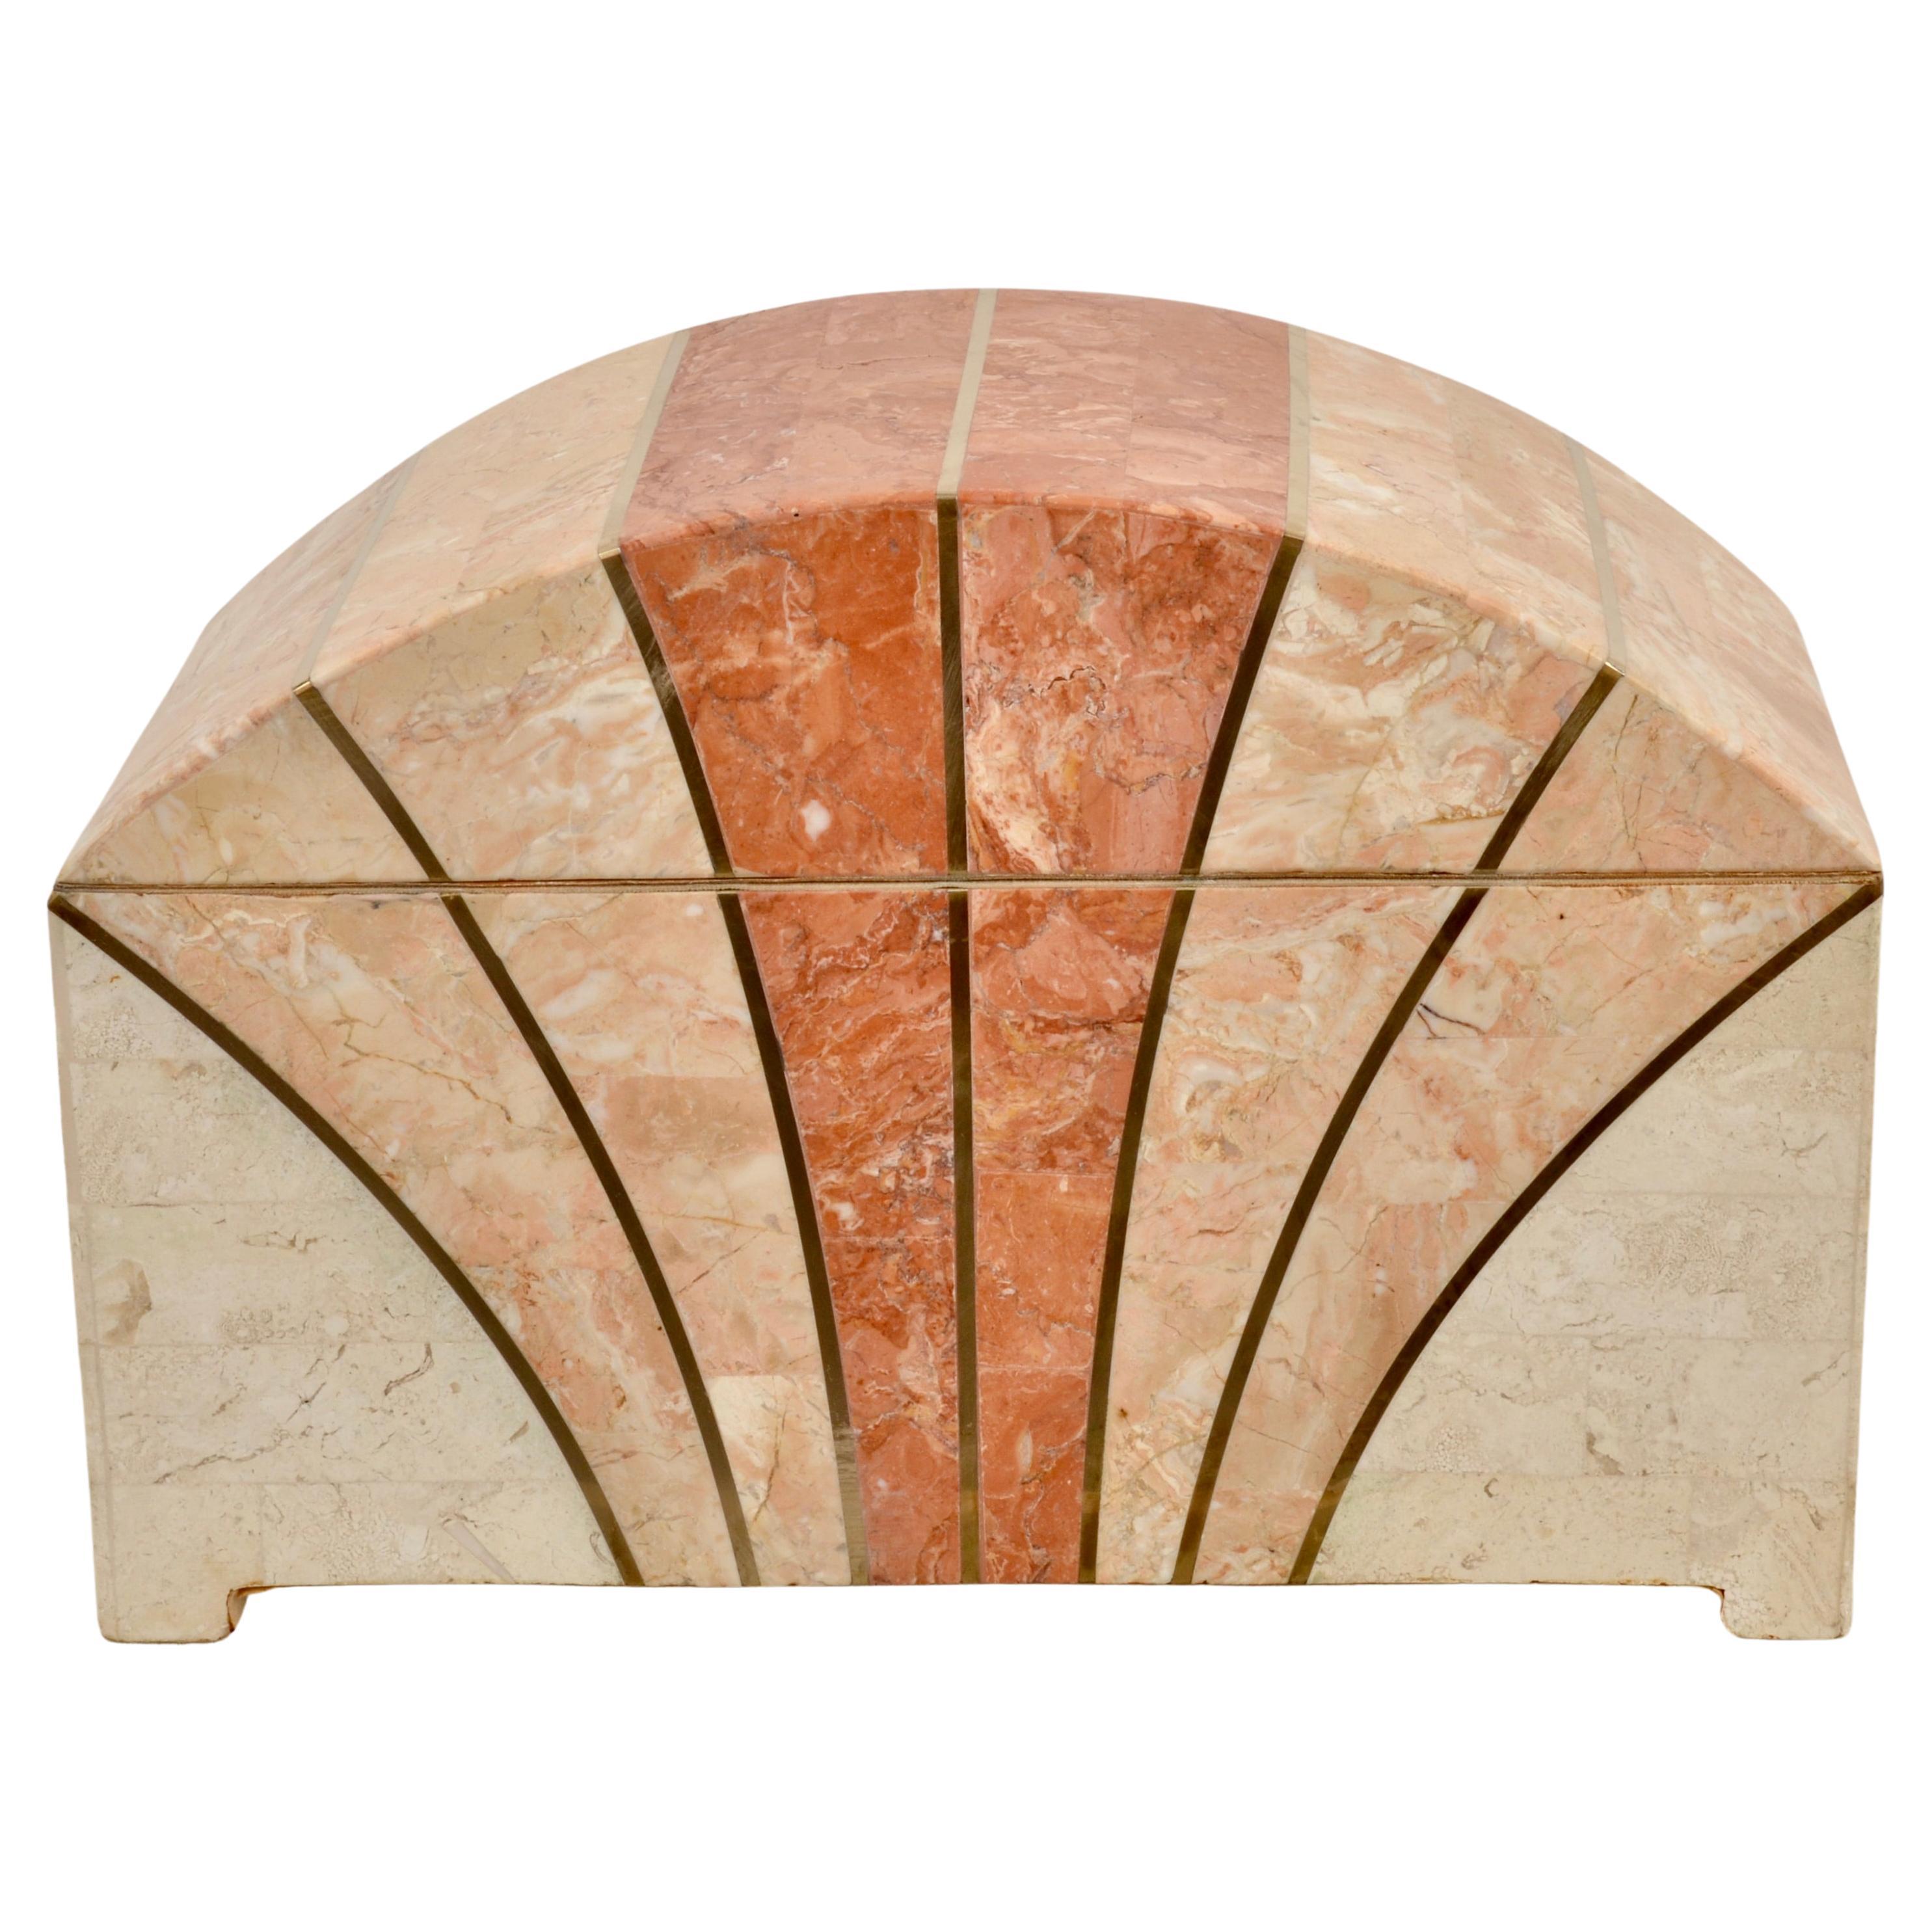 Dome Top Box aus Marmor mit Mosaik